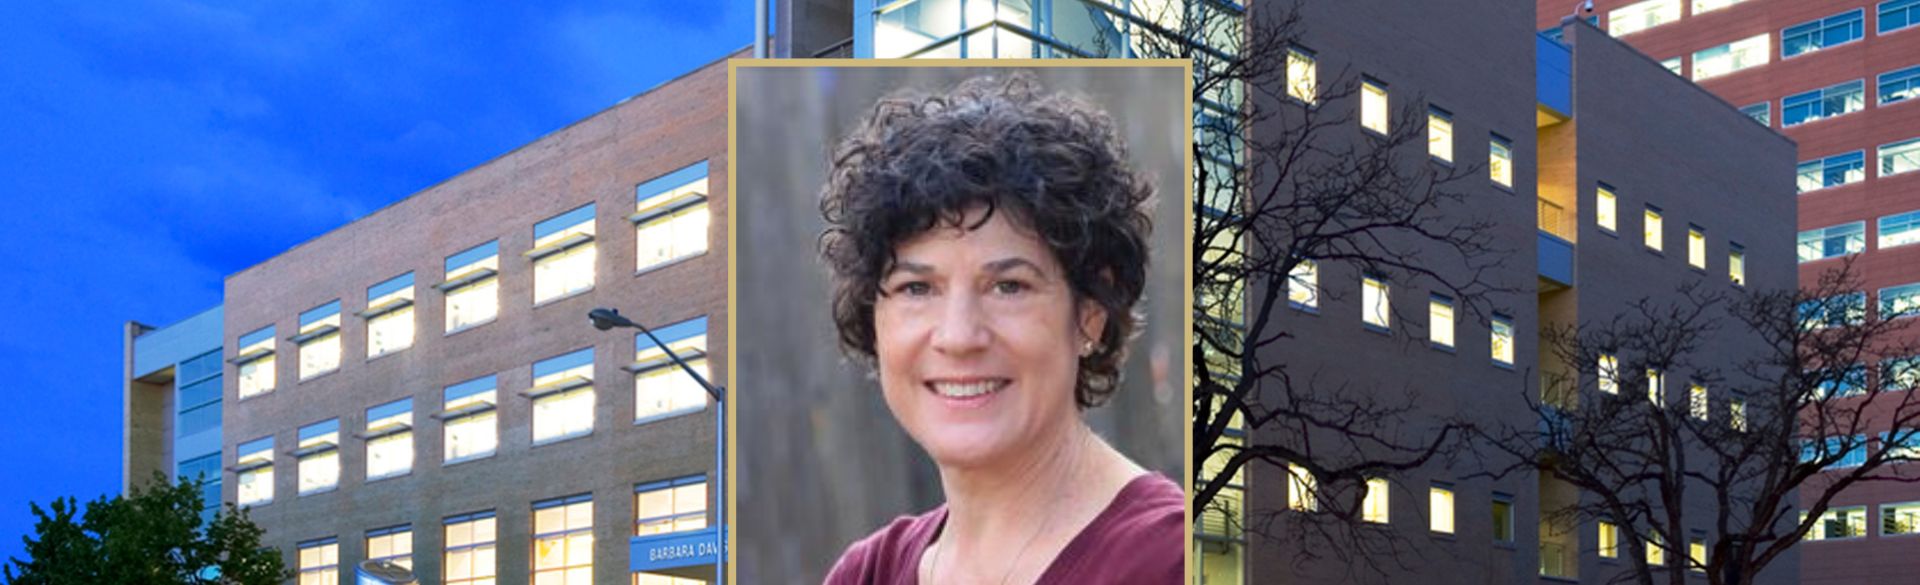 Lori Sussel head shot superimposed over diabetes research building